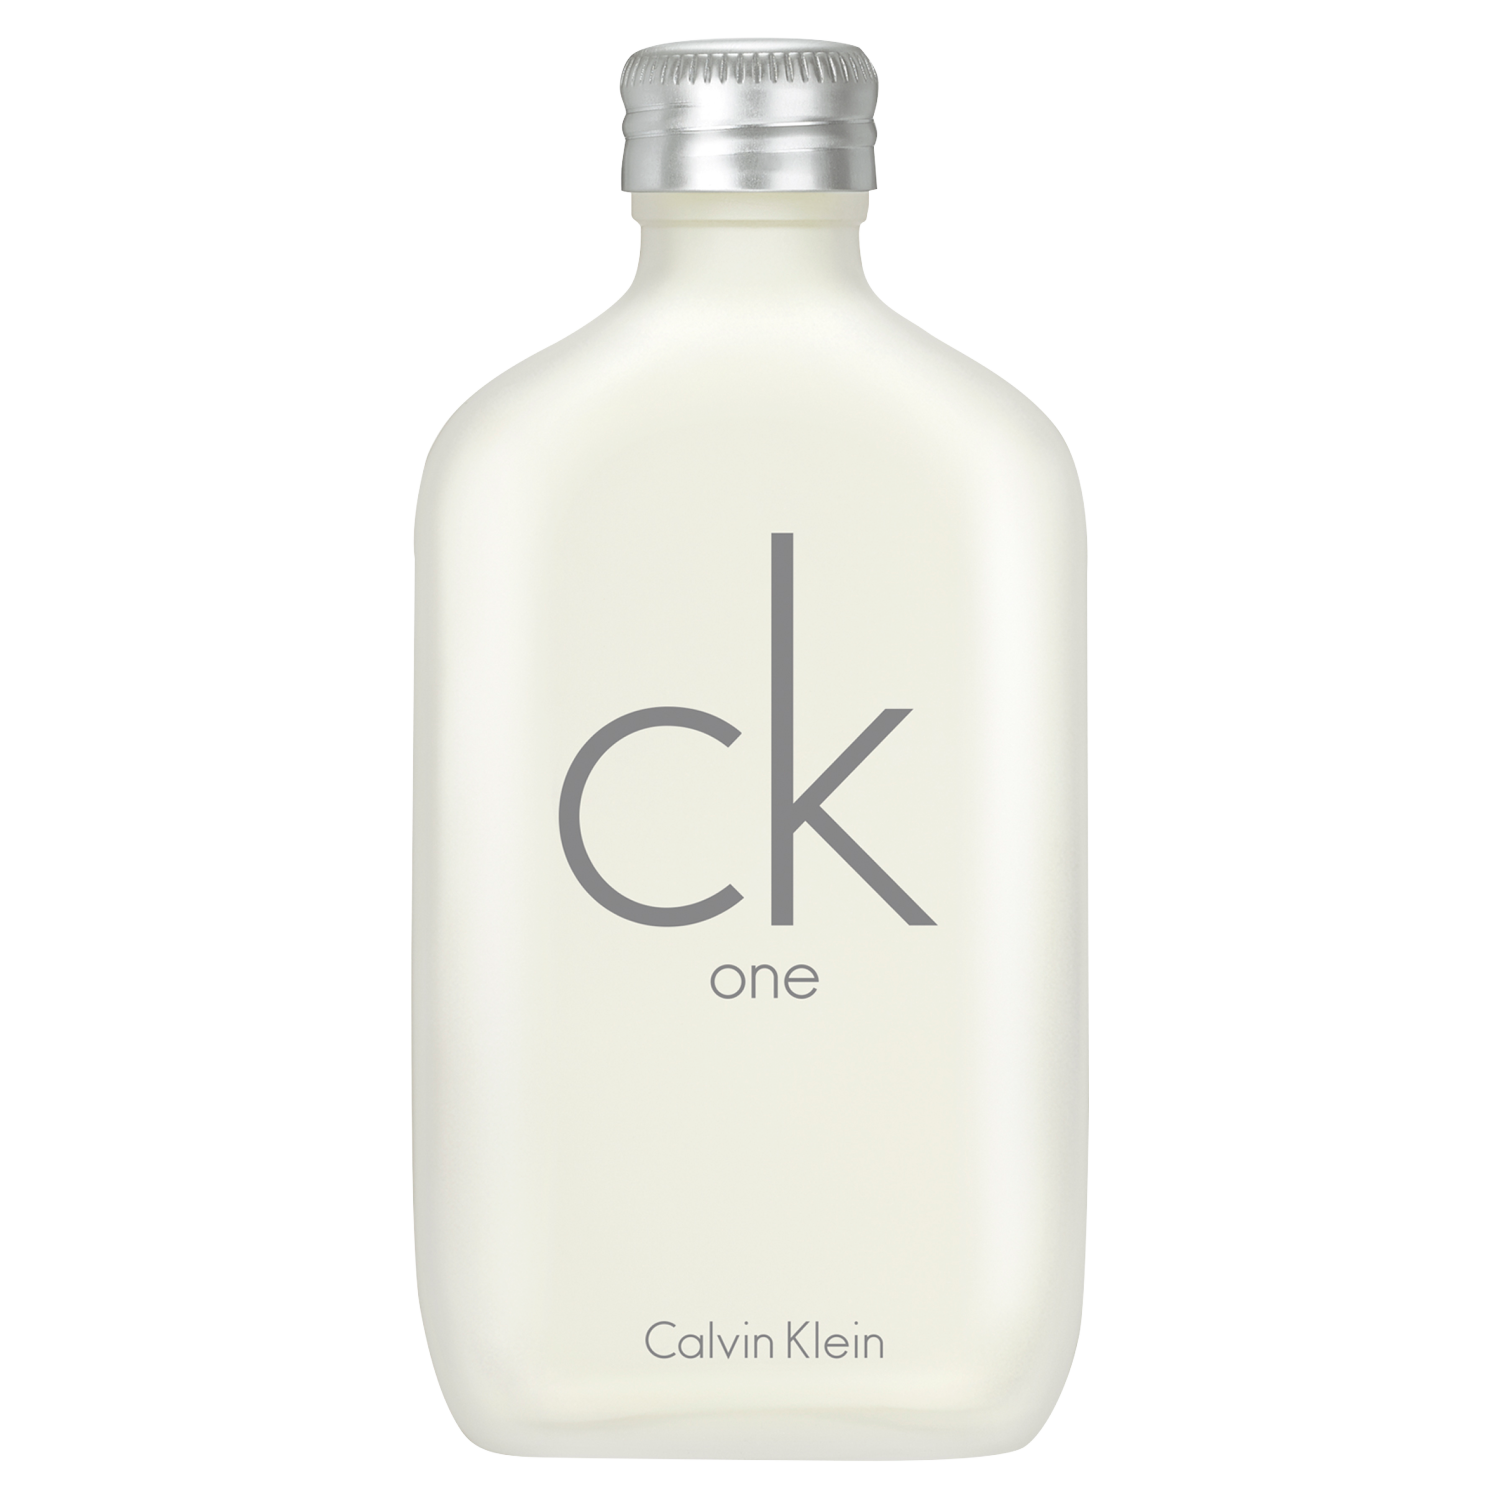 Calvin Klein One woda toaletowa unisex, 100 ml | hebe.pl